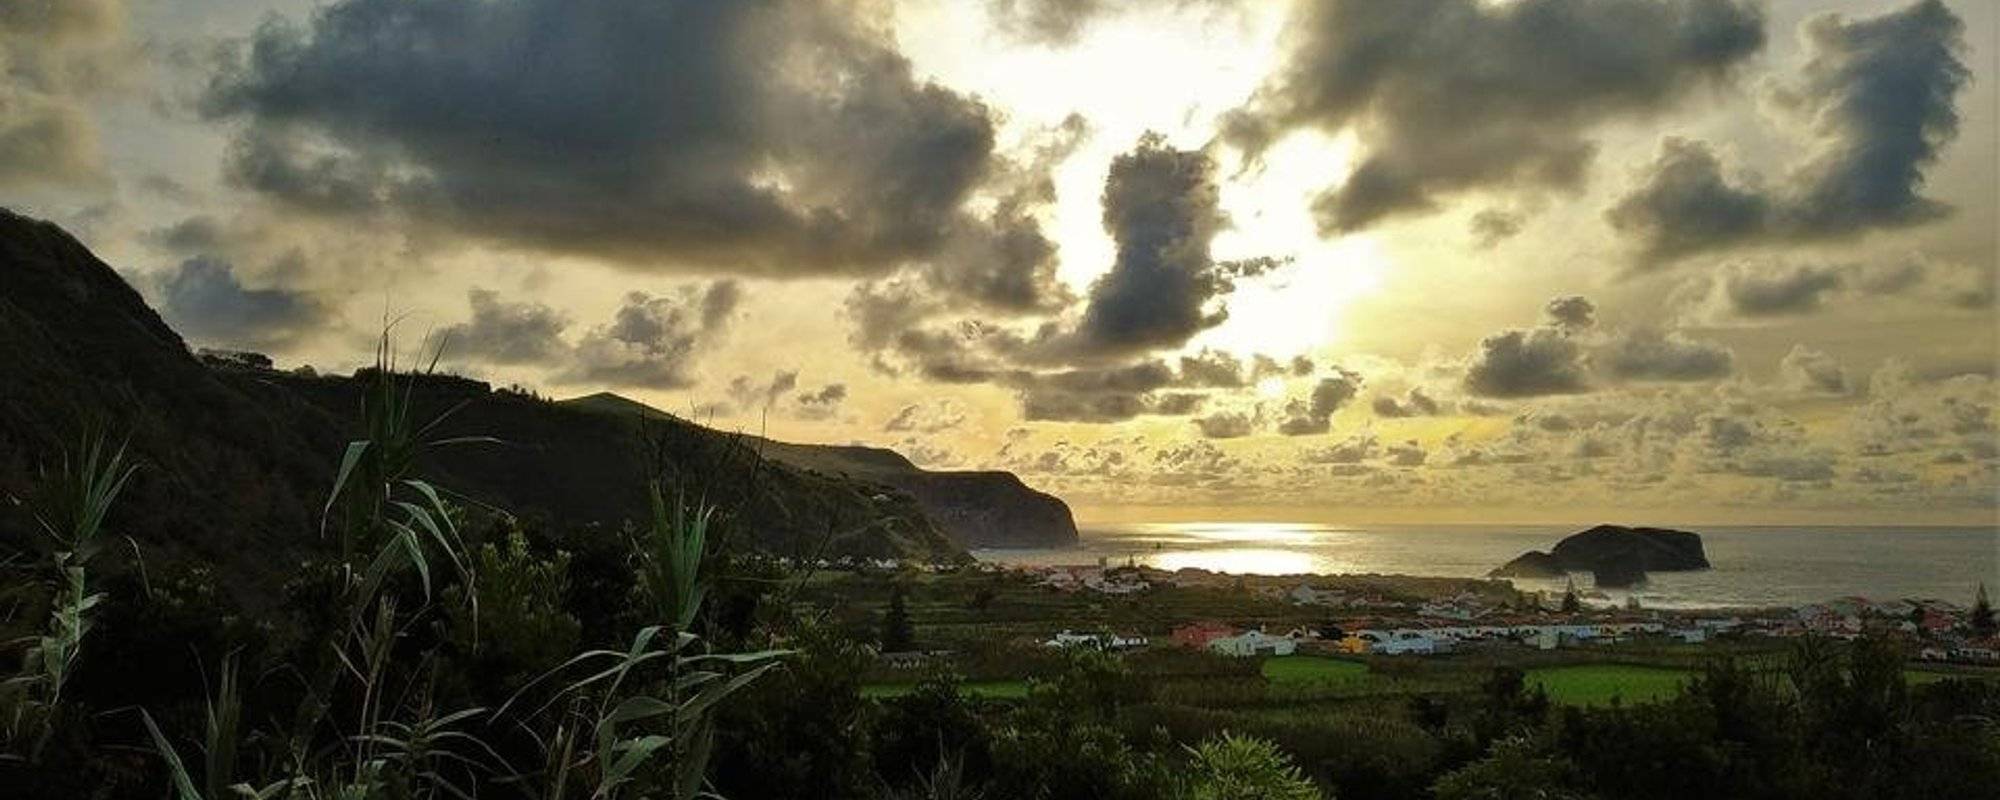 Beauties of Azores: sneak peek into breathtaking landscape of Sao Miguel